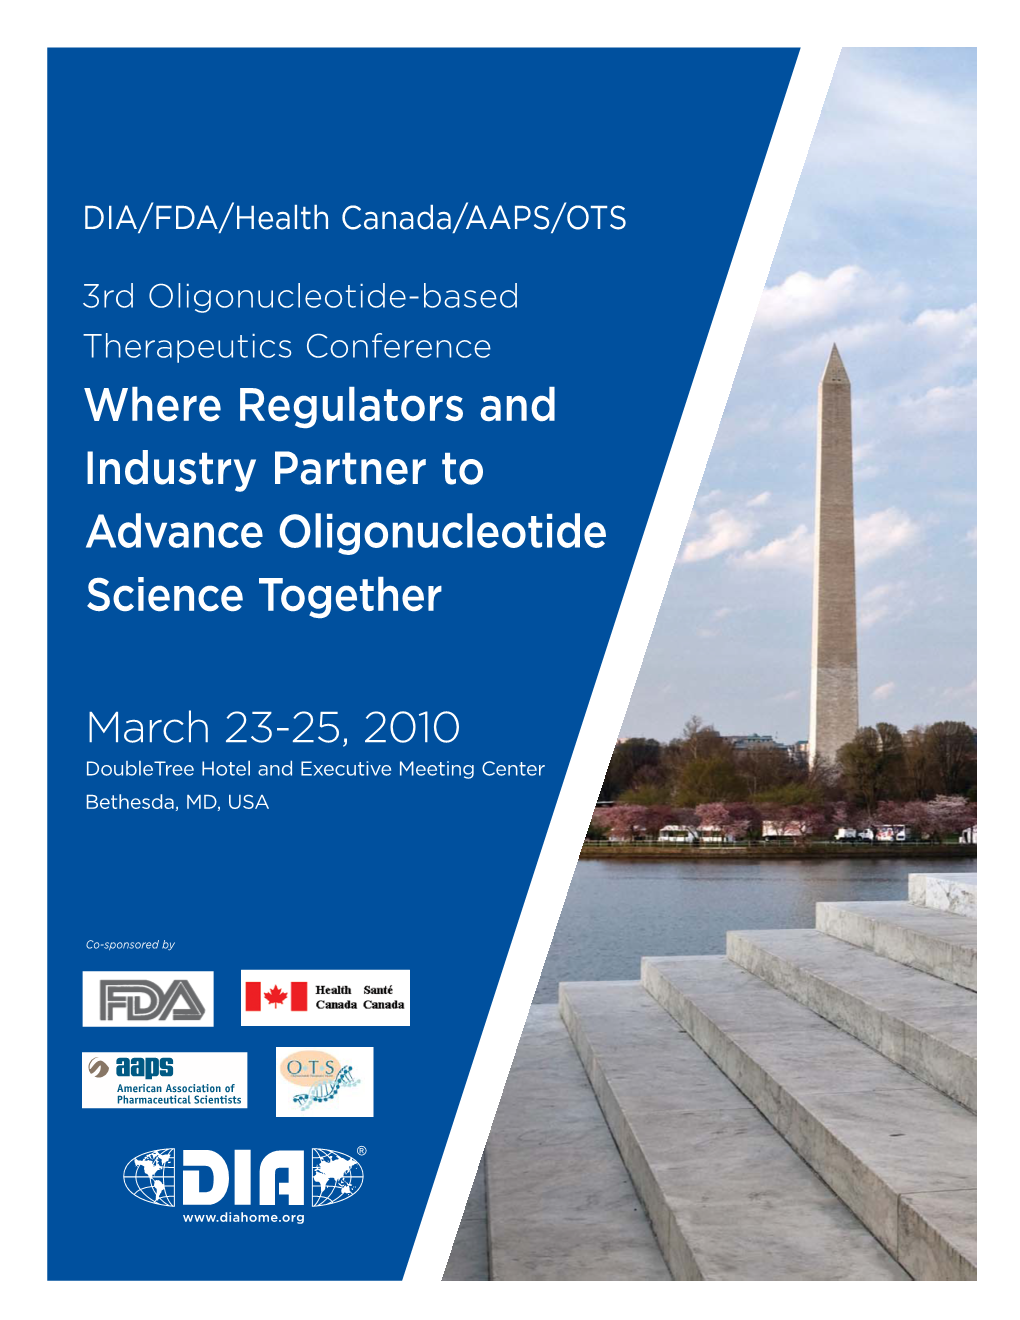 Where Regulators and Industry Partner to Advance Oligonucleotide Science Together